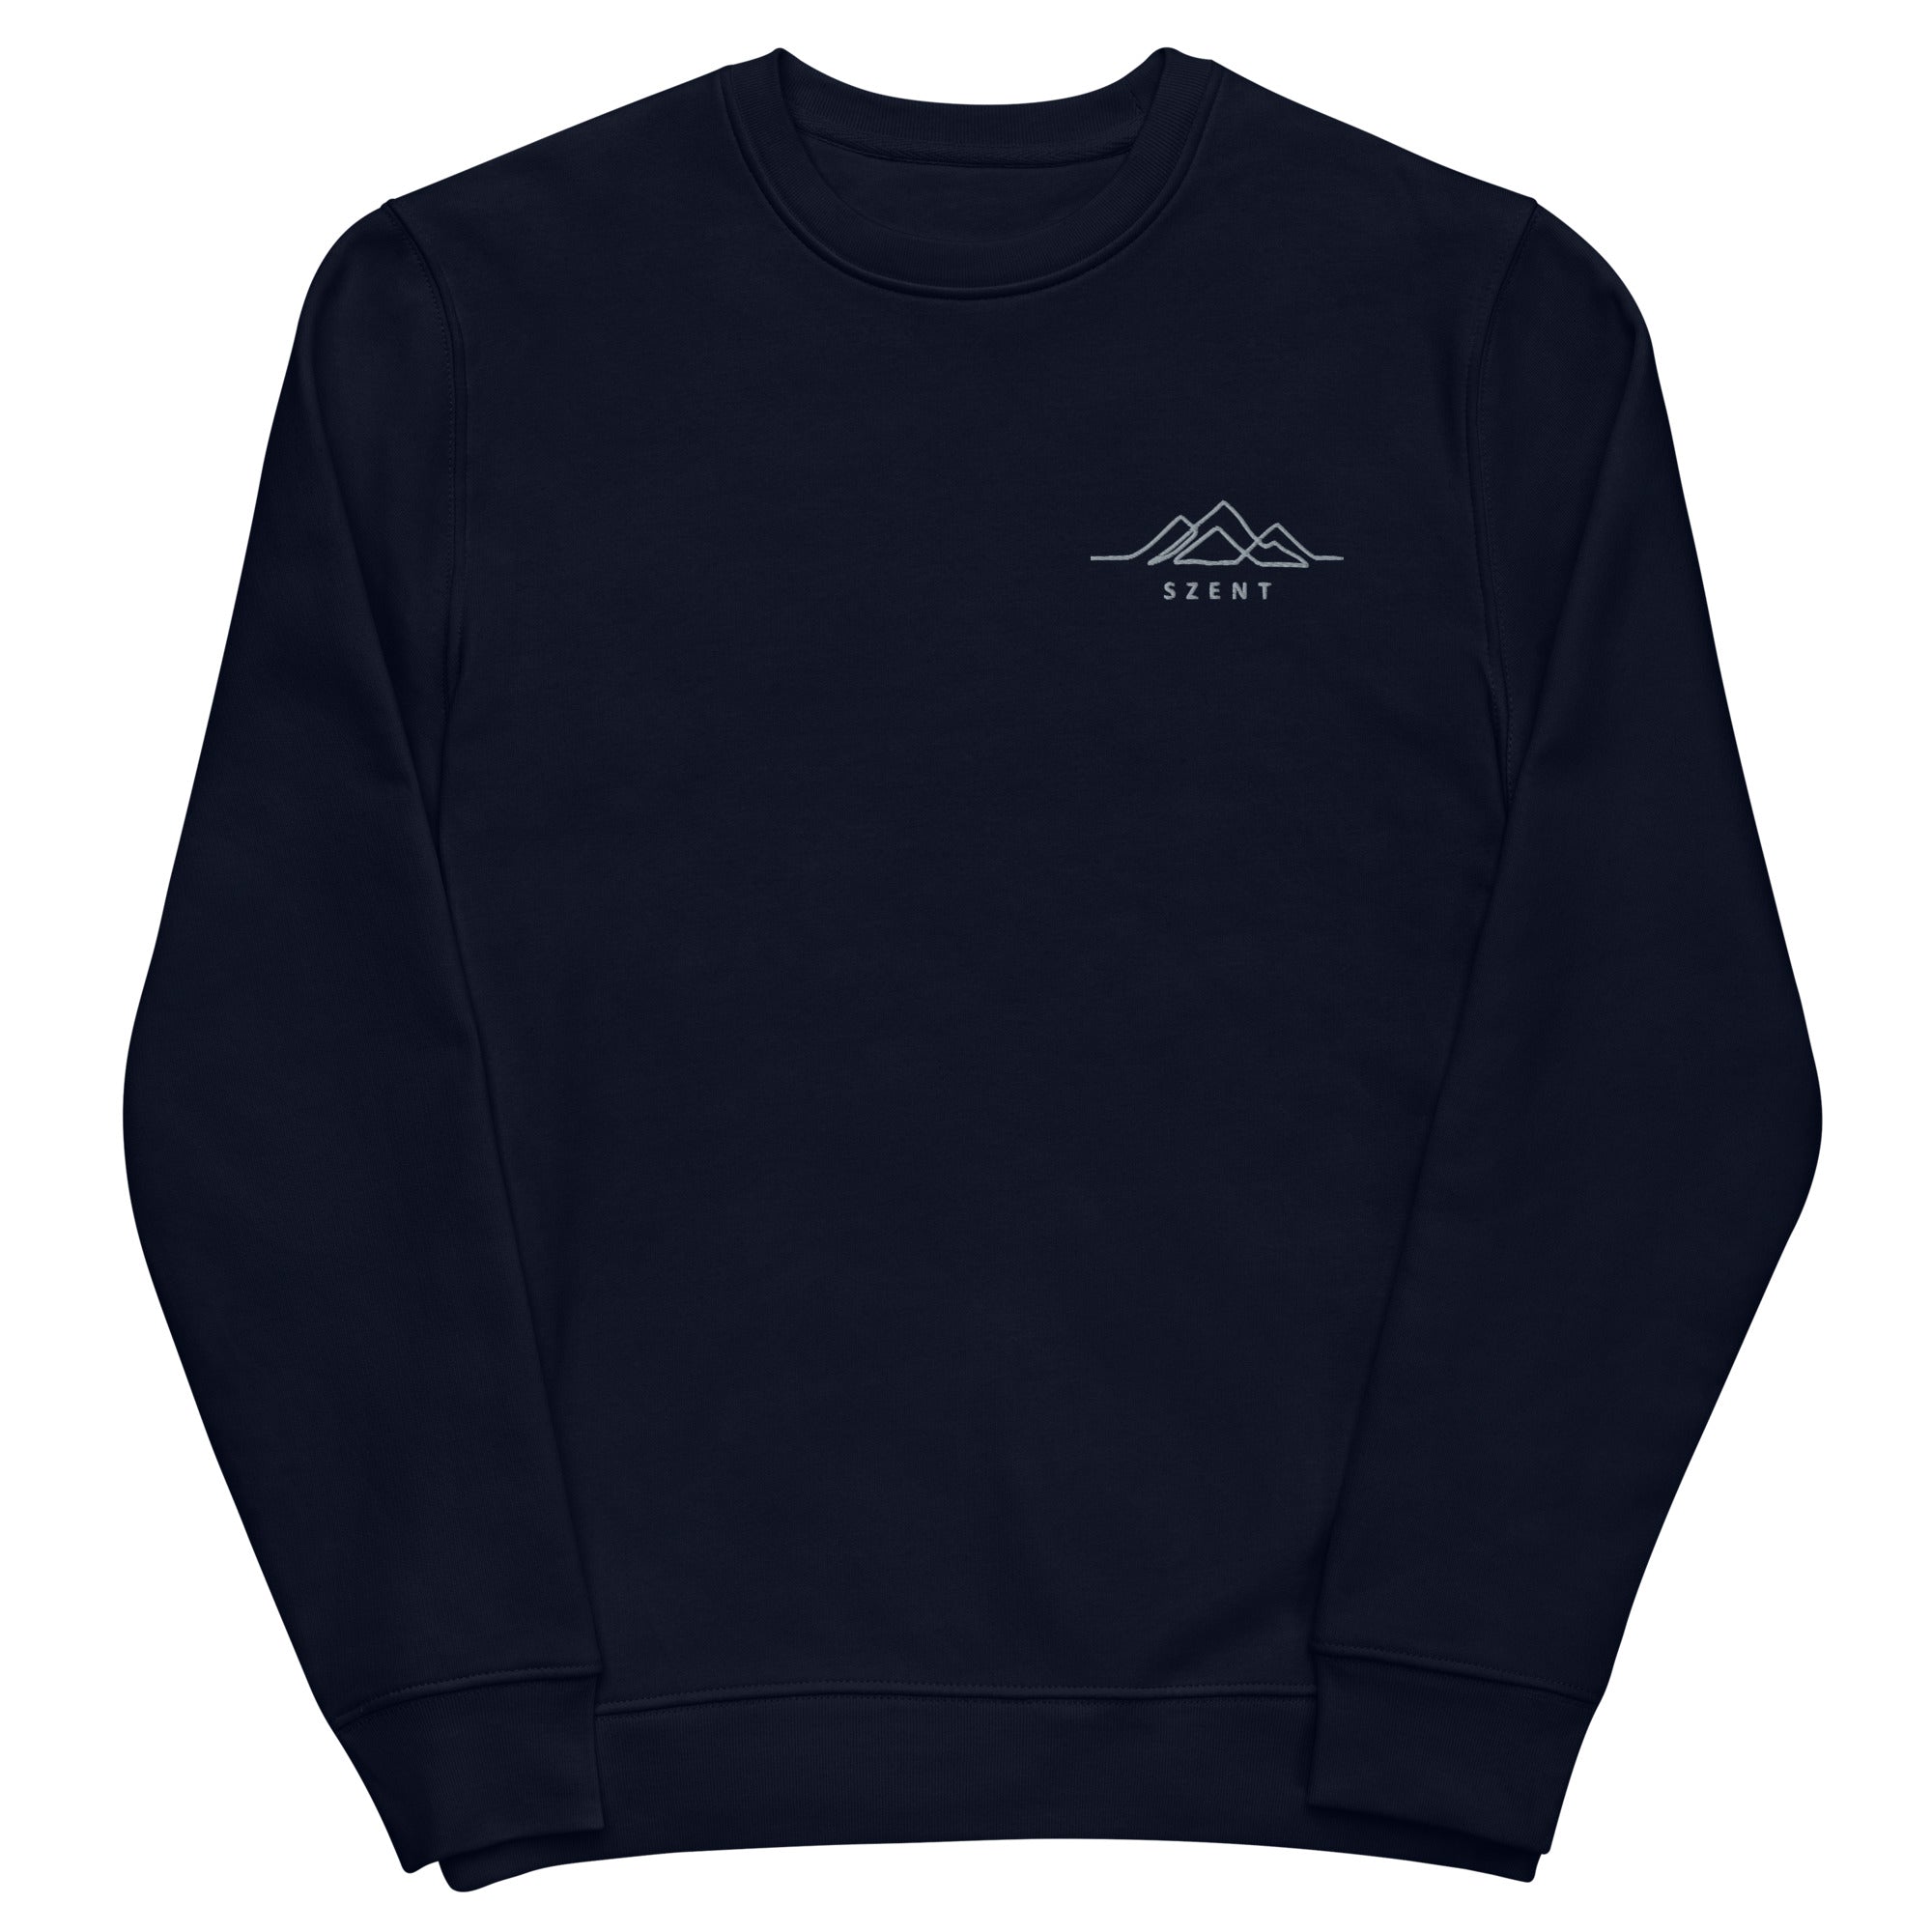 Organic Sweatshirt - Navy